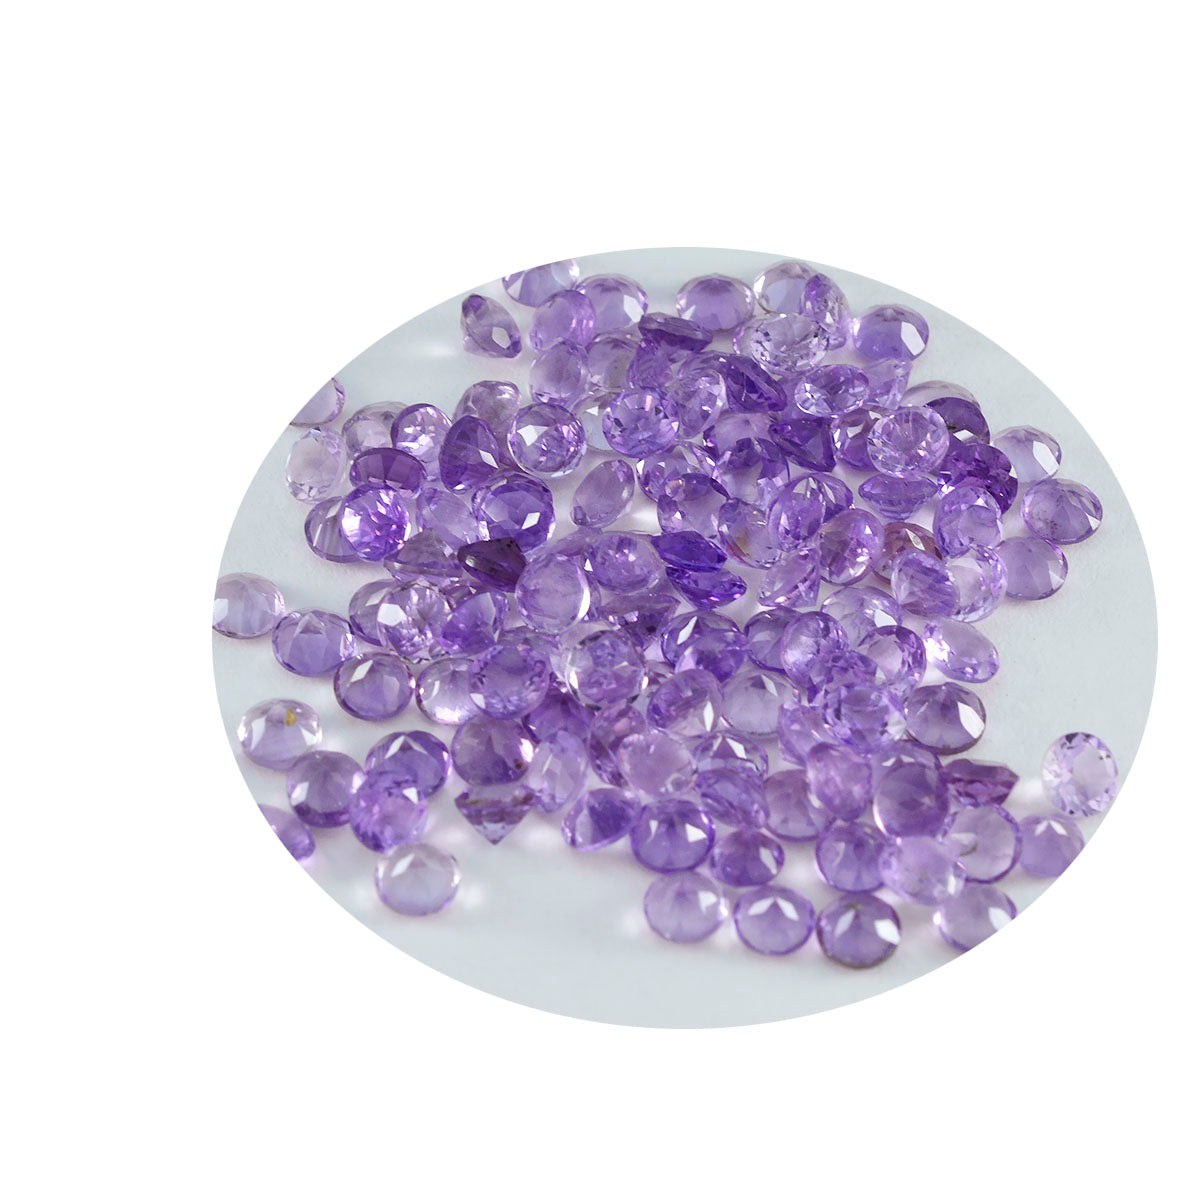 Riyogems 1PC Genuine Purple Amethyst Faceted 3x3 mm Round Shape startling Quality Gems